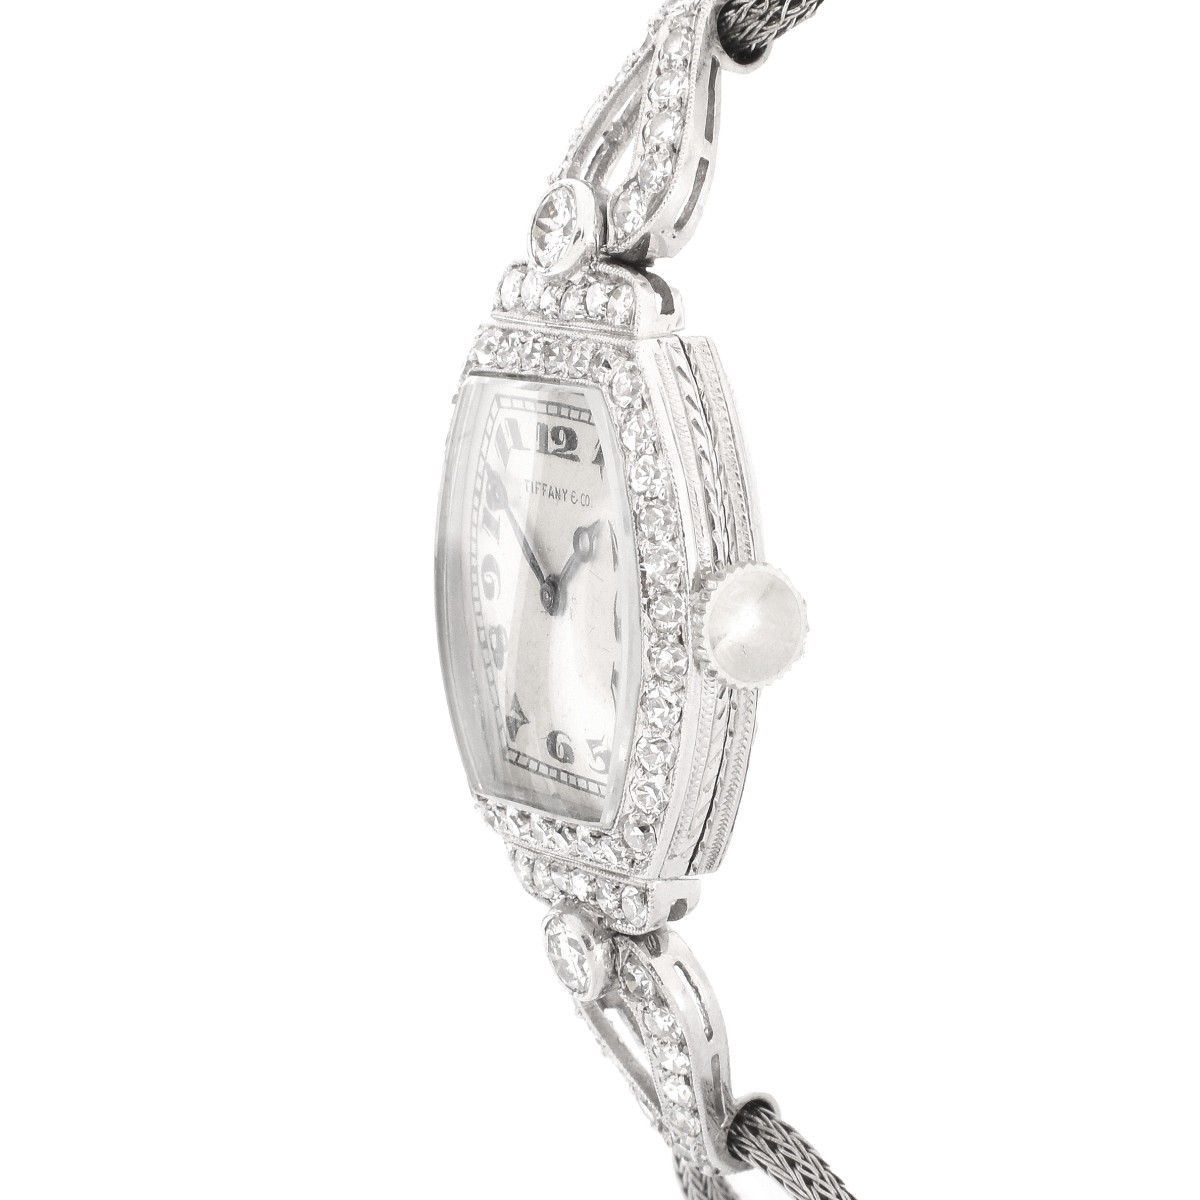 Antique Tiffany & Co Diamond and Platinum Watch